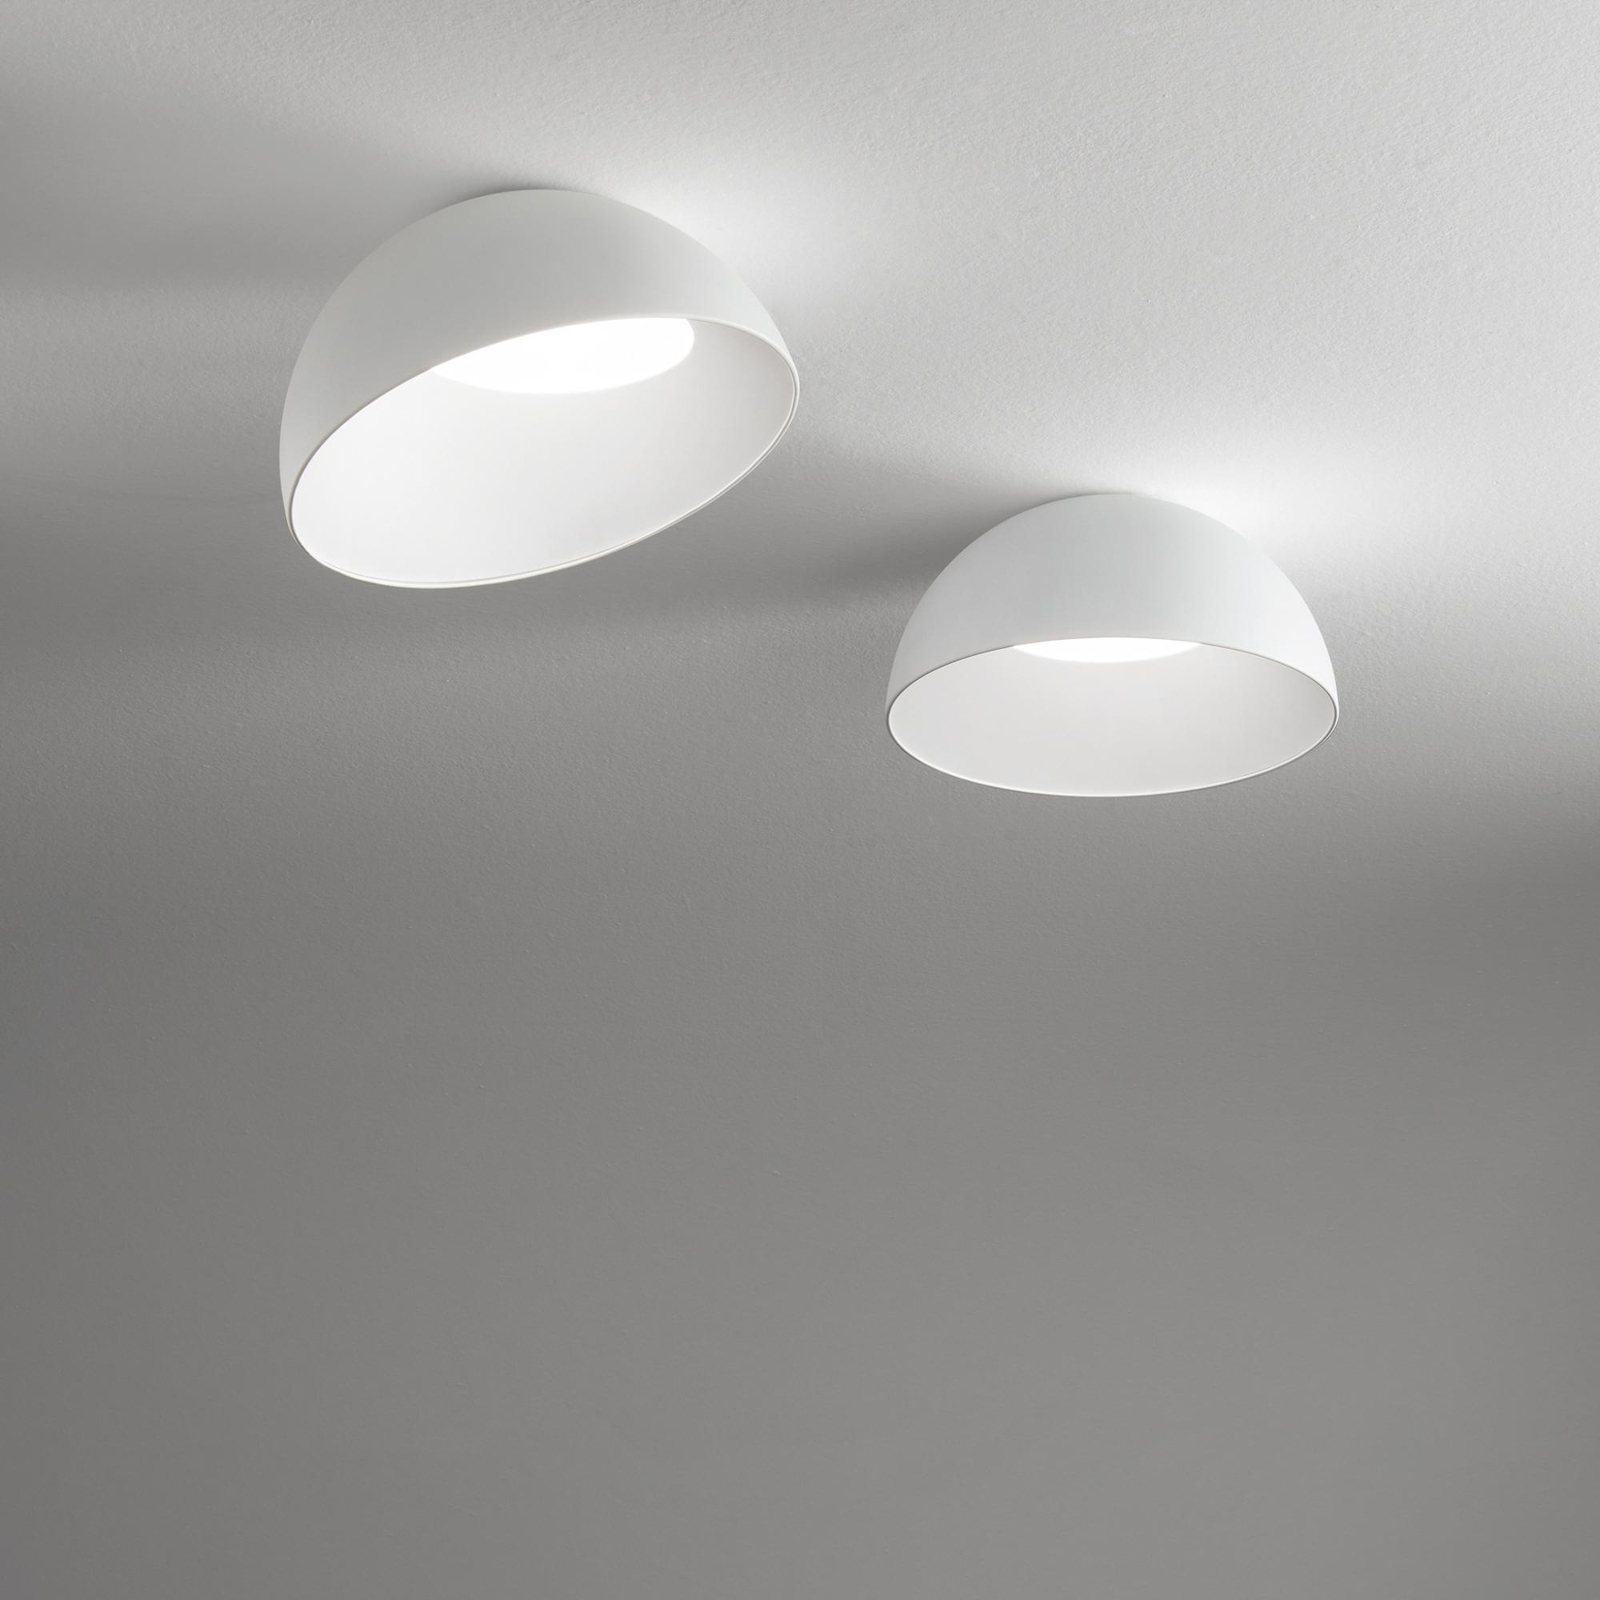 Ideal Lux LED plafondlamp Corolla-1, wit, metaal, Ø 35 cm